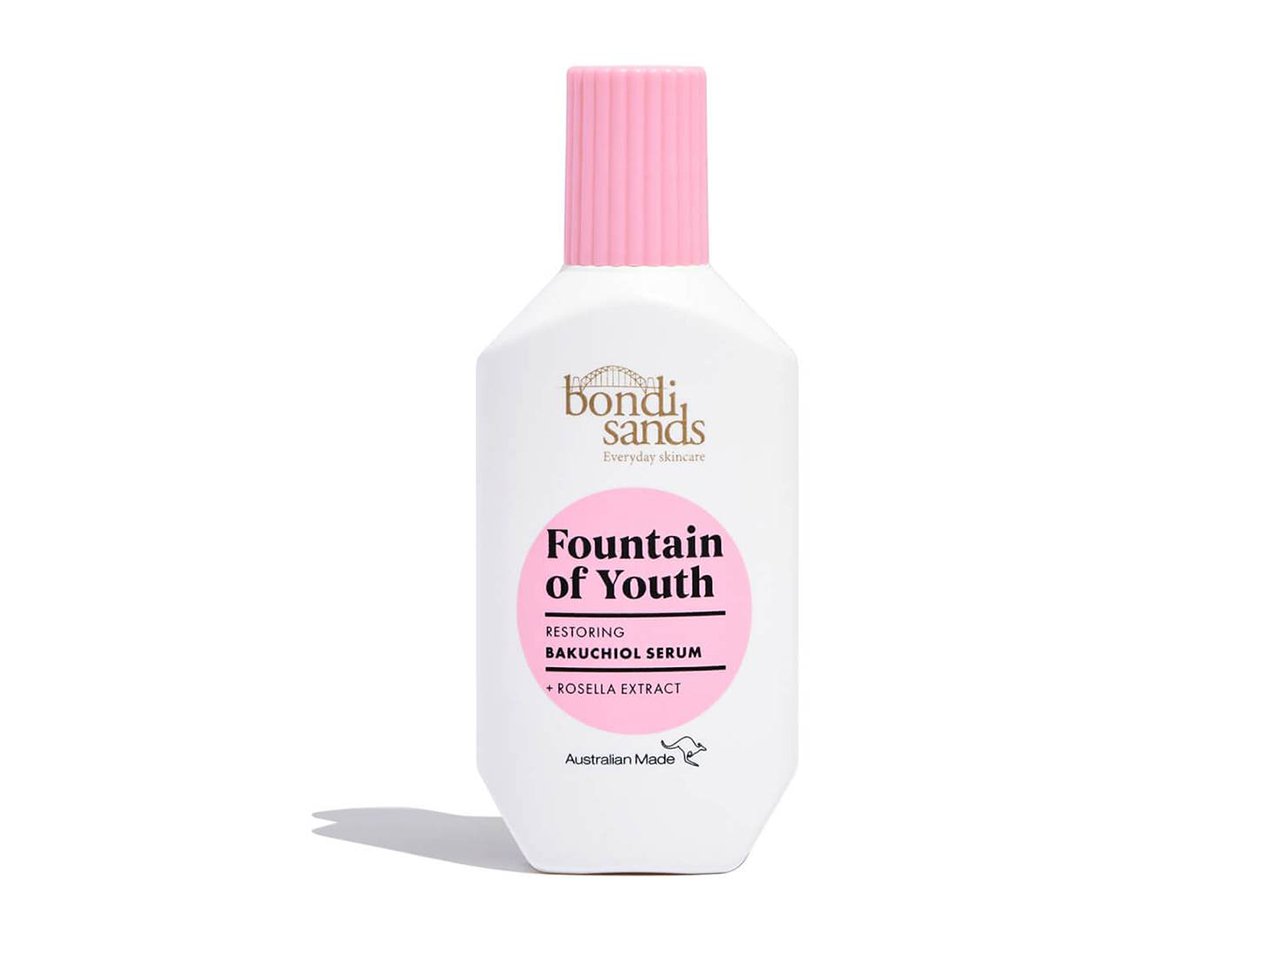 Bondi Sands Fountain of Youth Bakuchiol Serum white bottle with pink cap